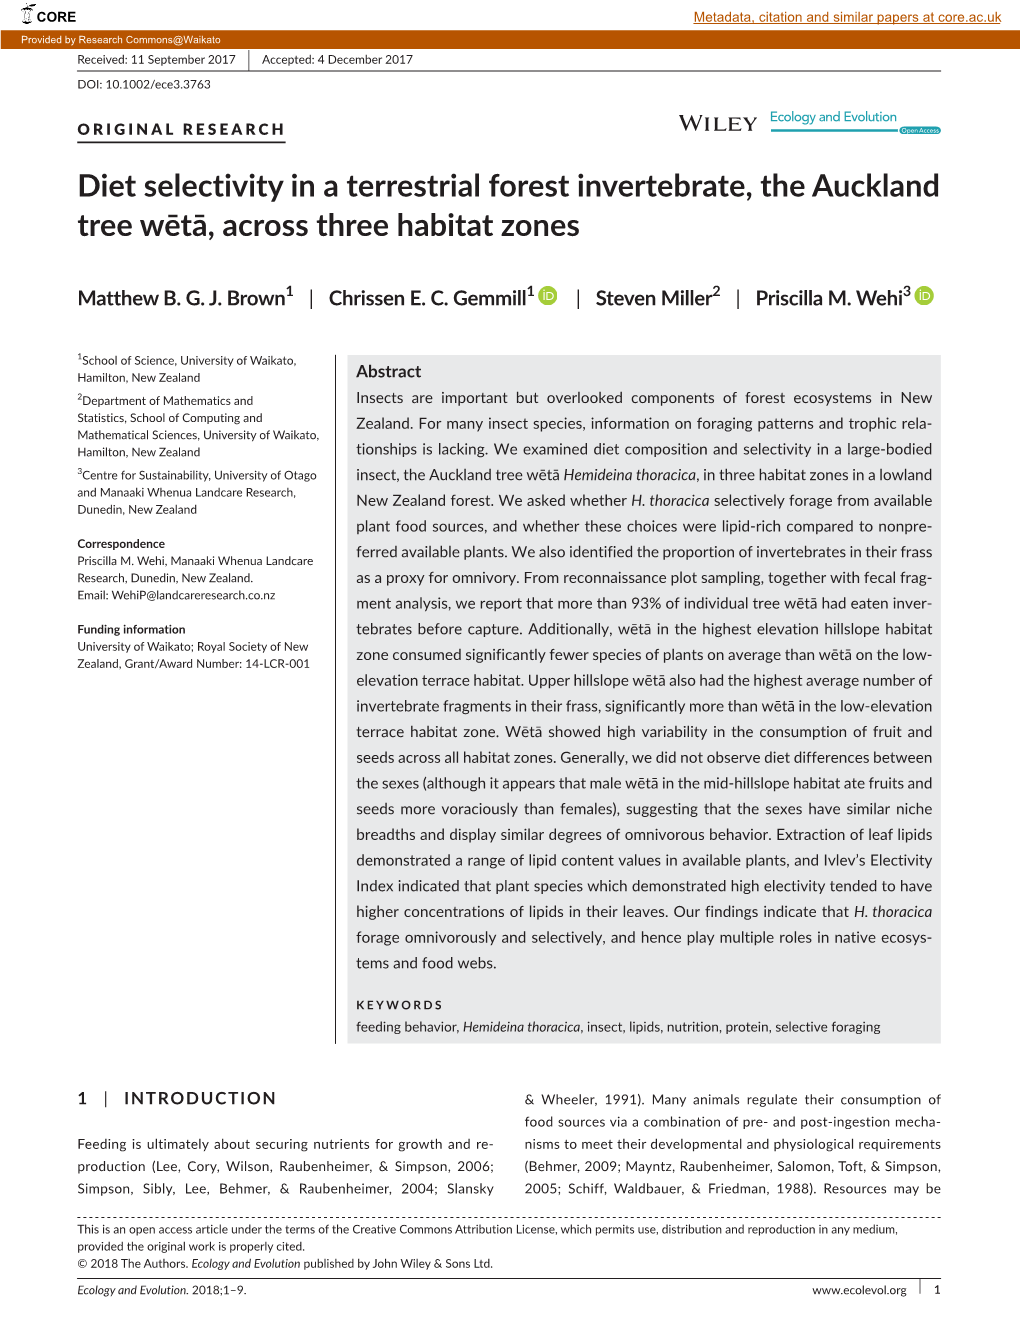 Diet Selectivity in a Terrestrial Forest Invertebrate, the Auckland Tree Wētā, Across Three Habitat Zones